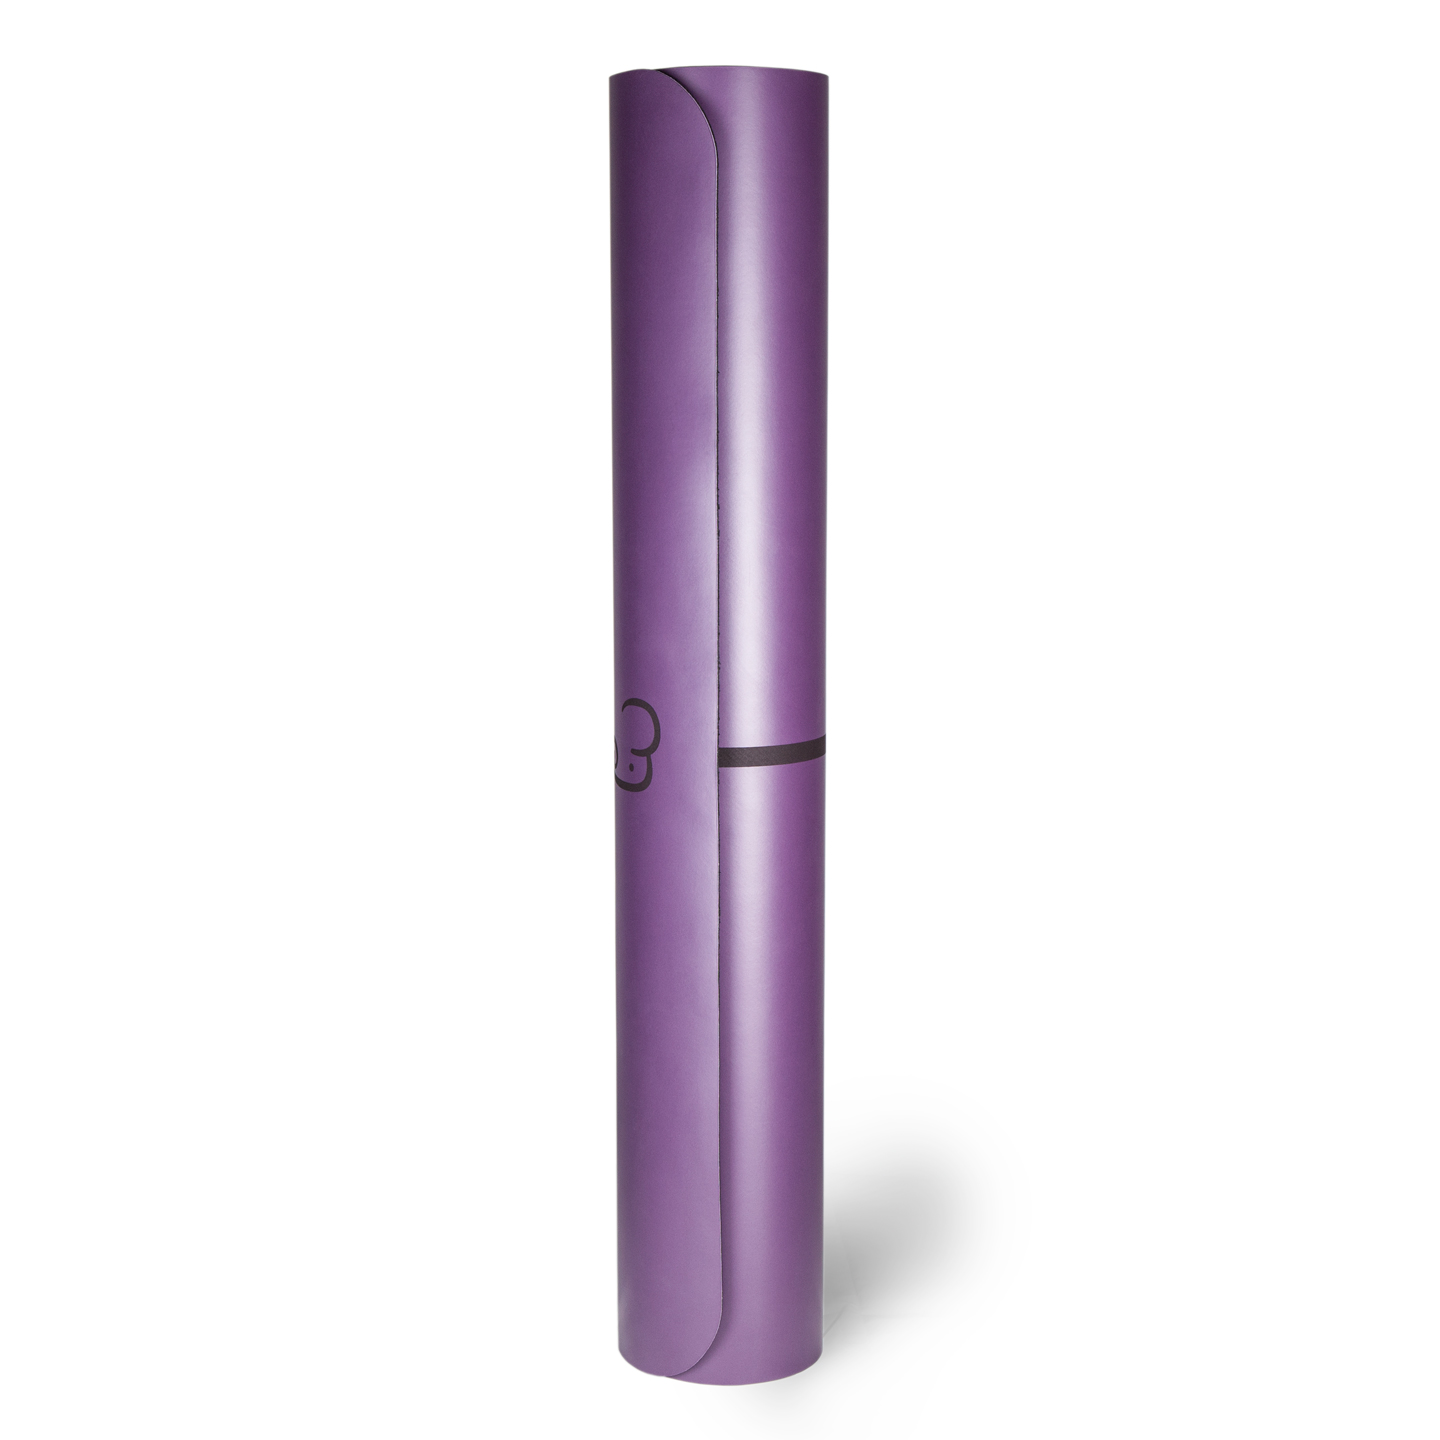 Mocana nimbus purple yoga mat with alignment and extra grip